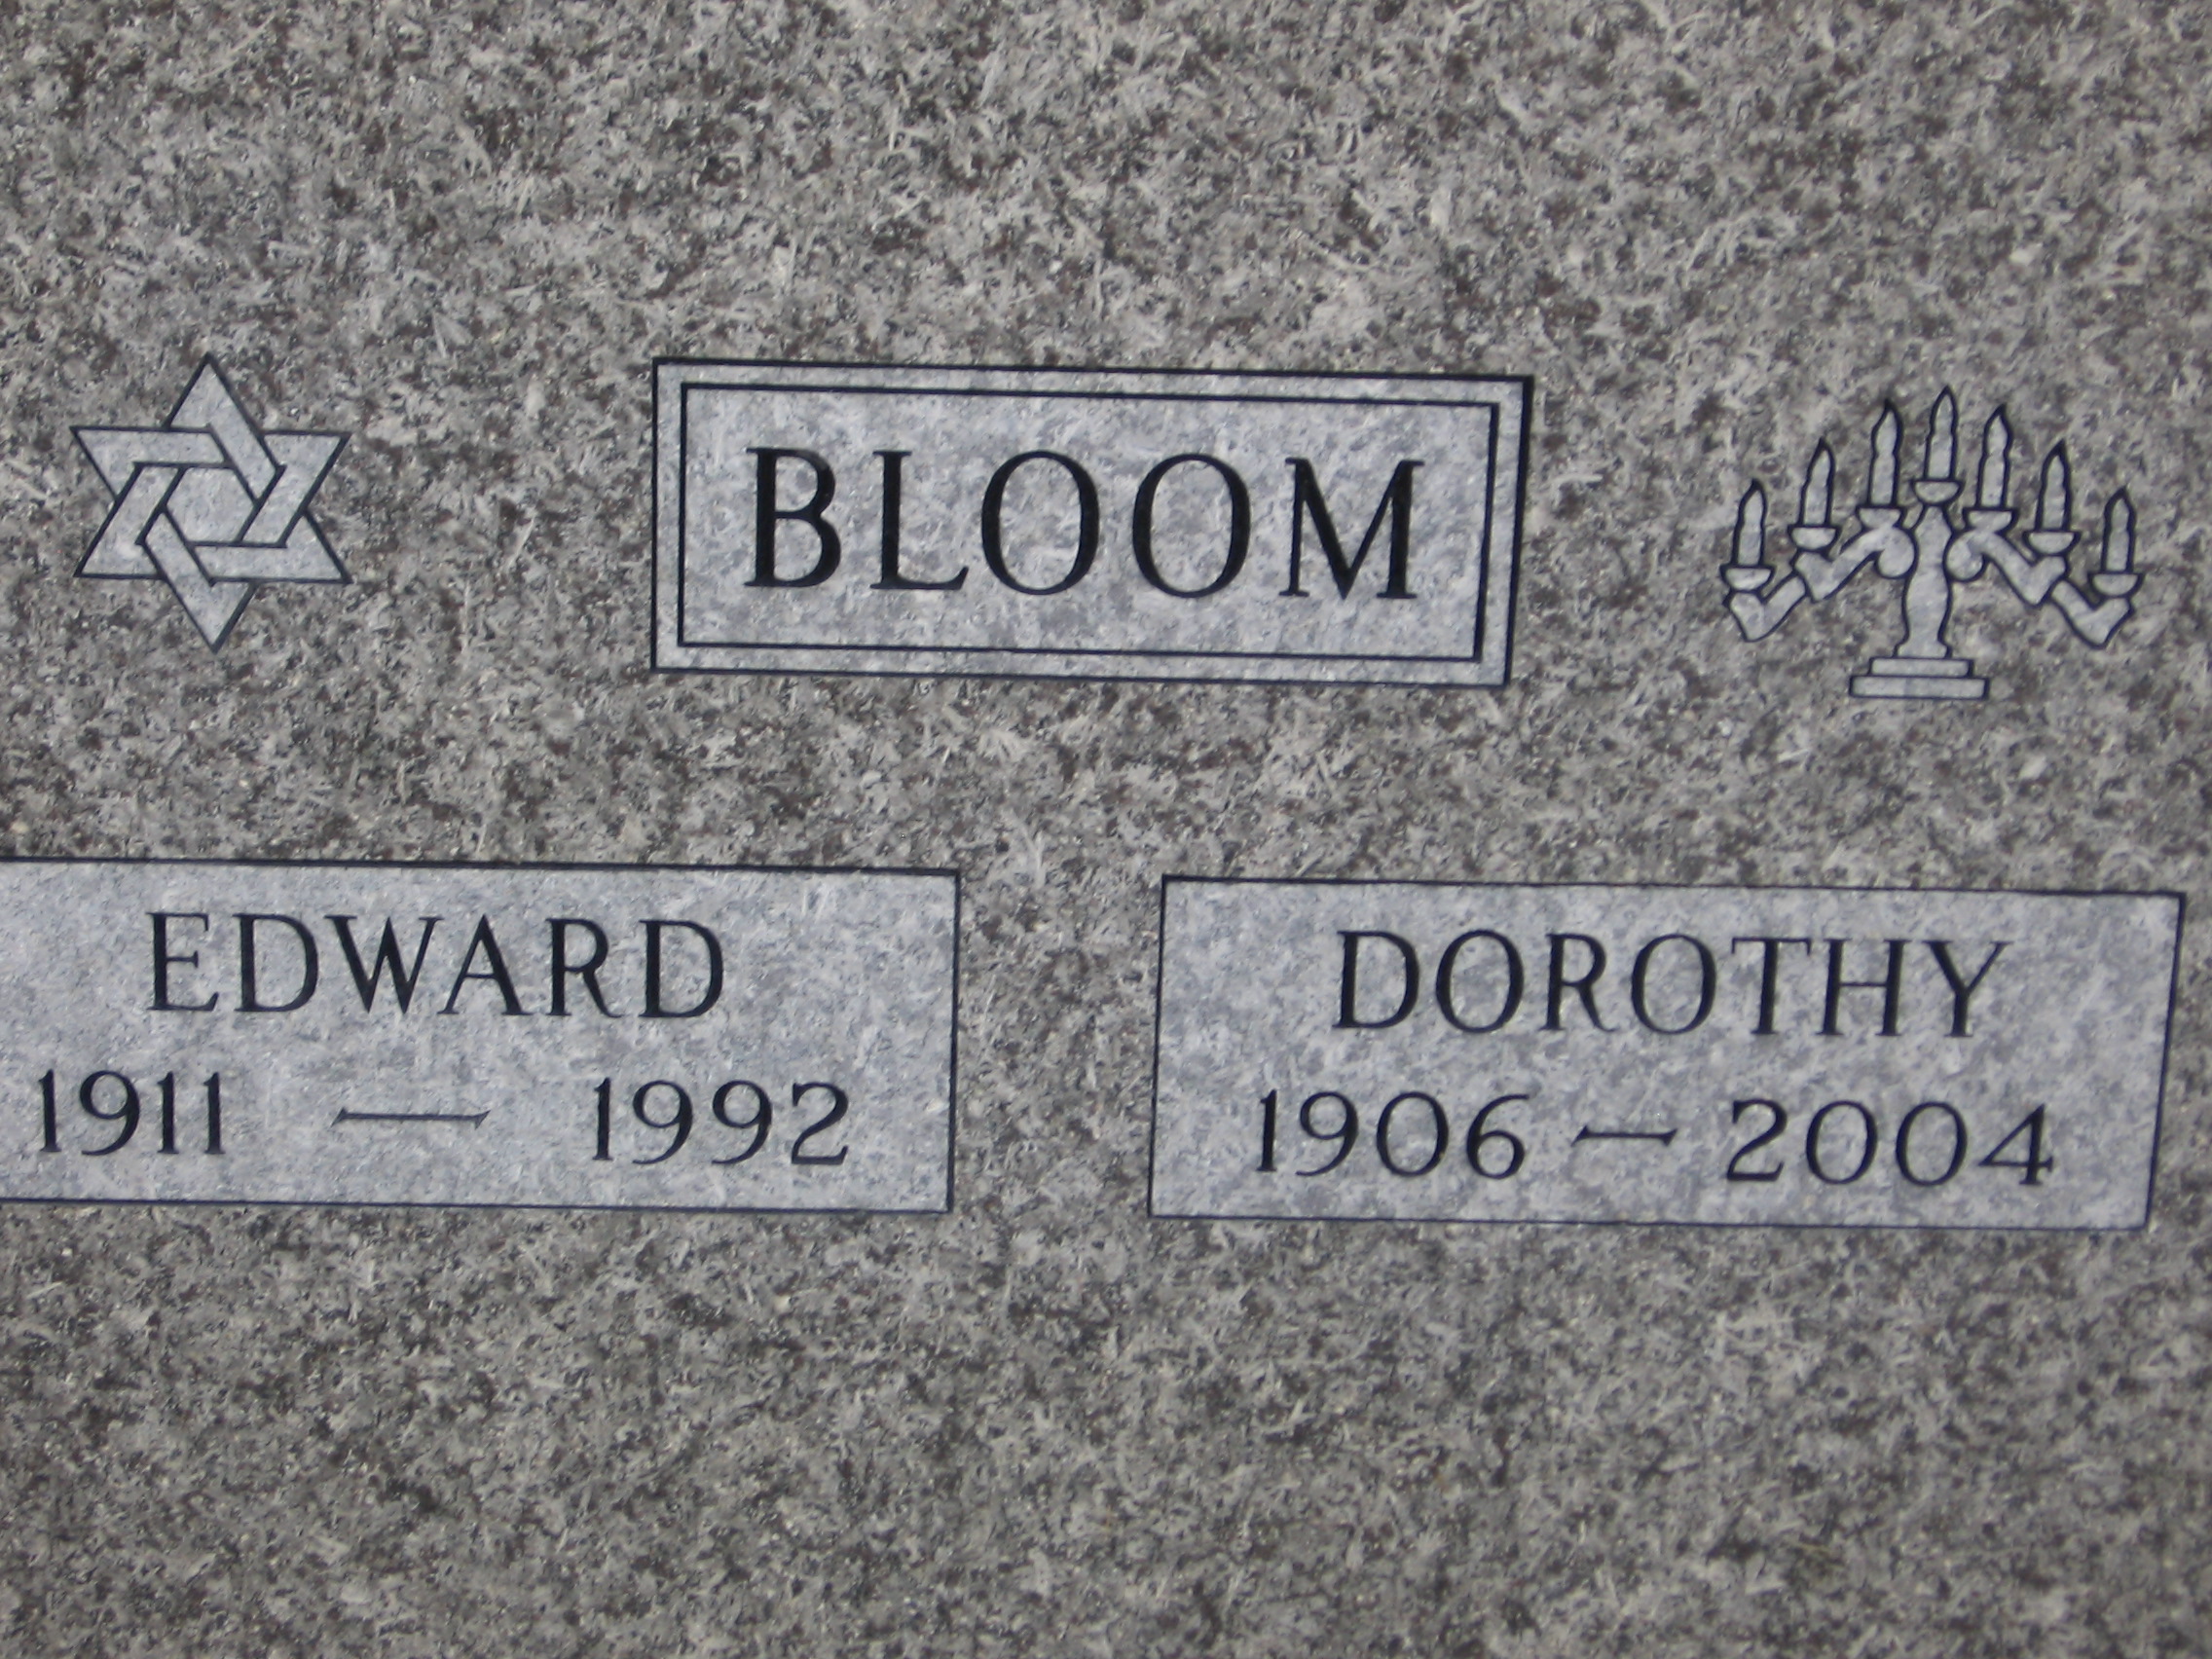 Dorothy Bloom